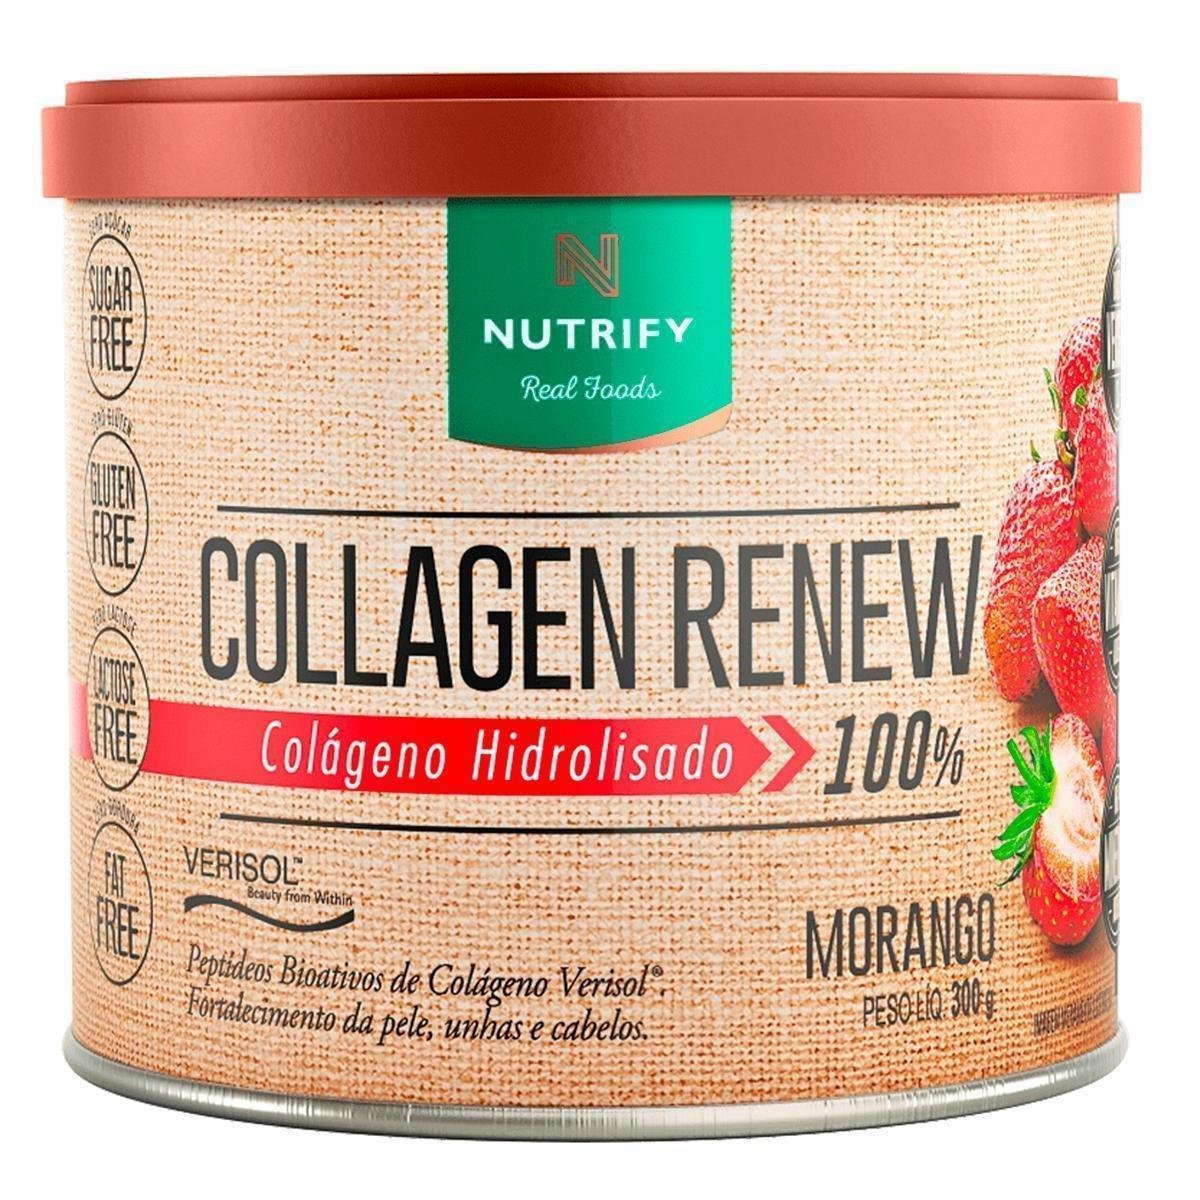 COLLAGEN RENEW MORANGO 300G Nutrify - 093